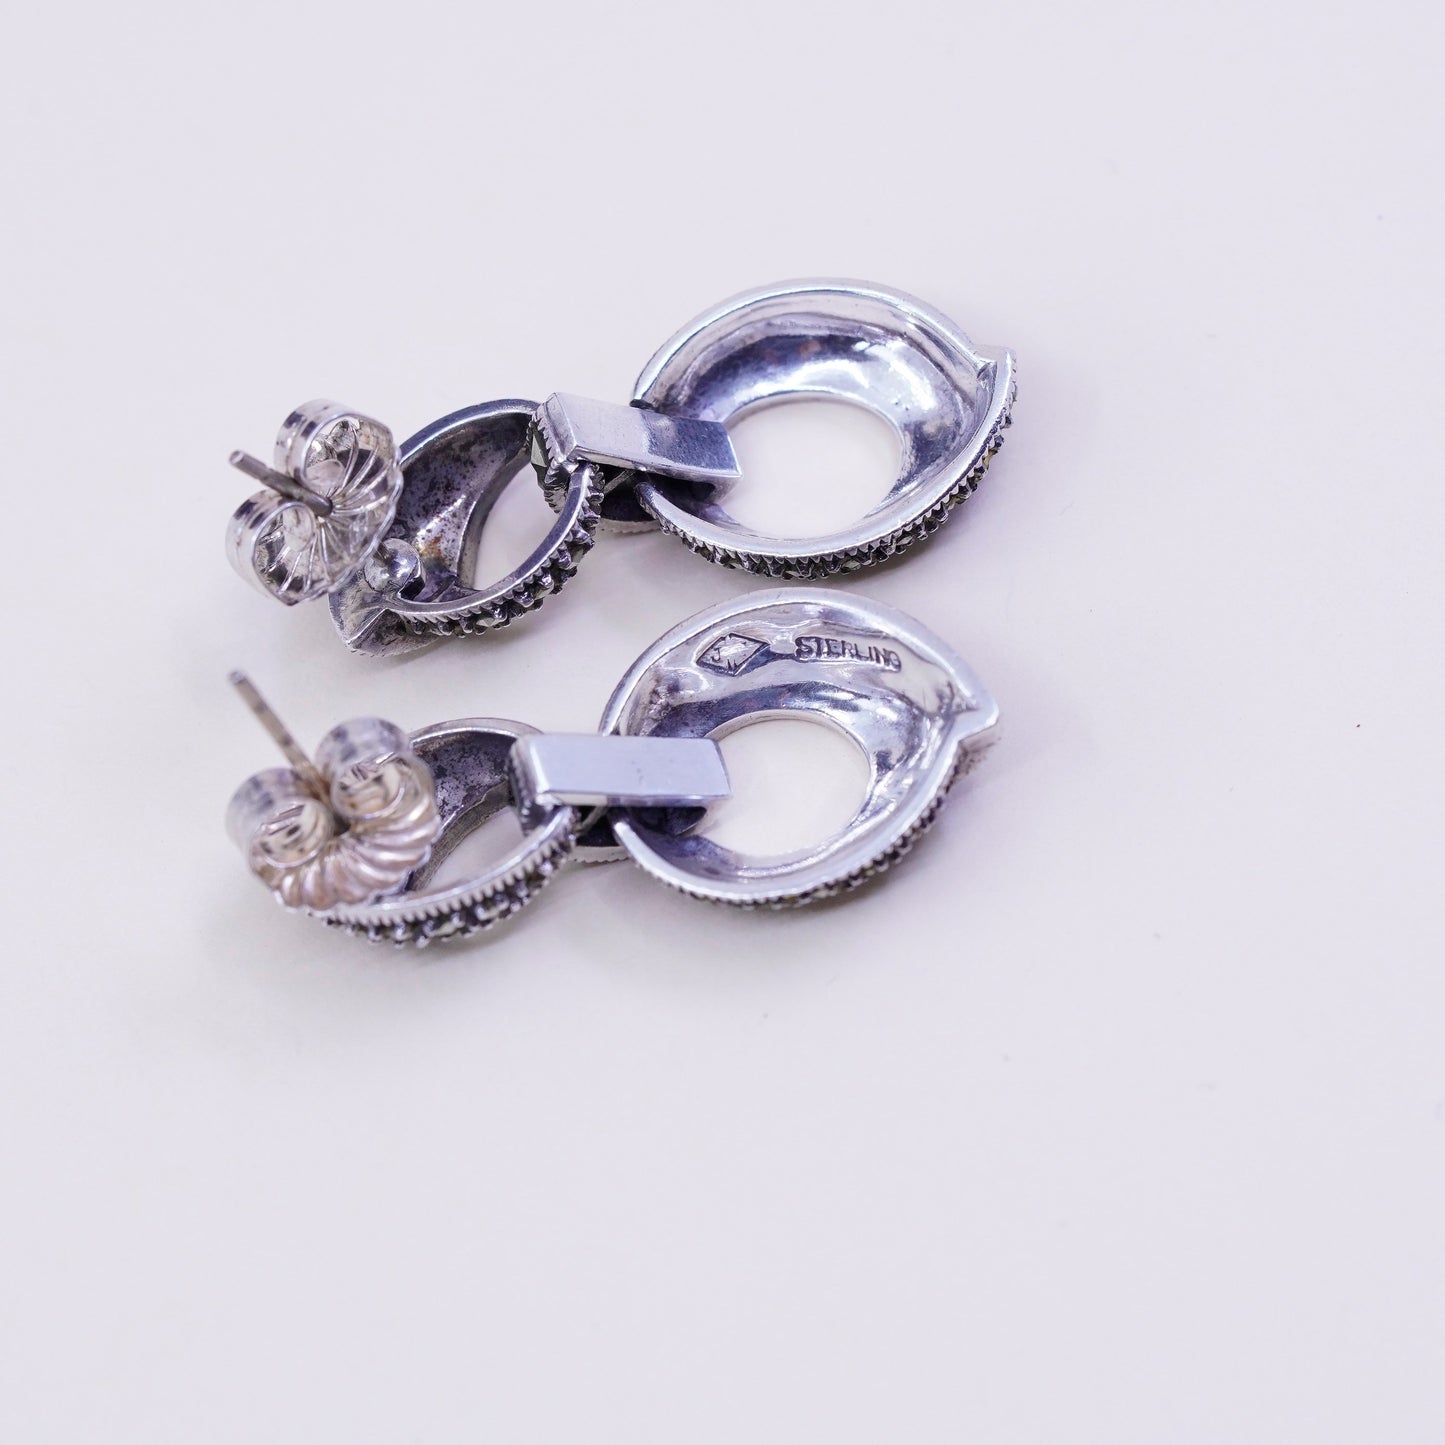 Vintage Judith Jack Sterling 925 silver earrings with Marcasite and teardrop dangles, stamped sterling JJ